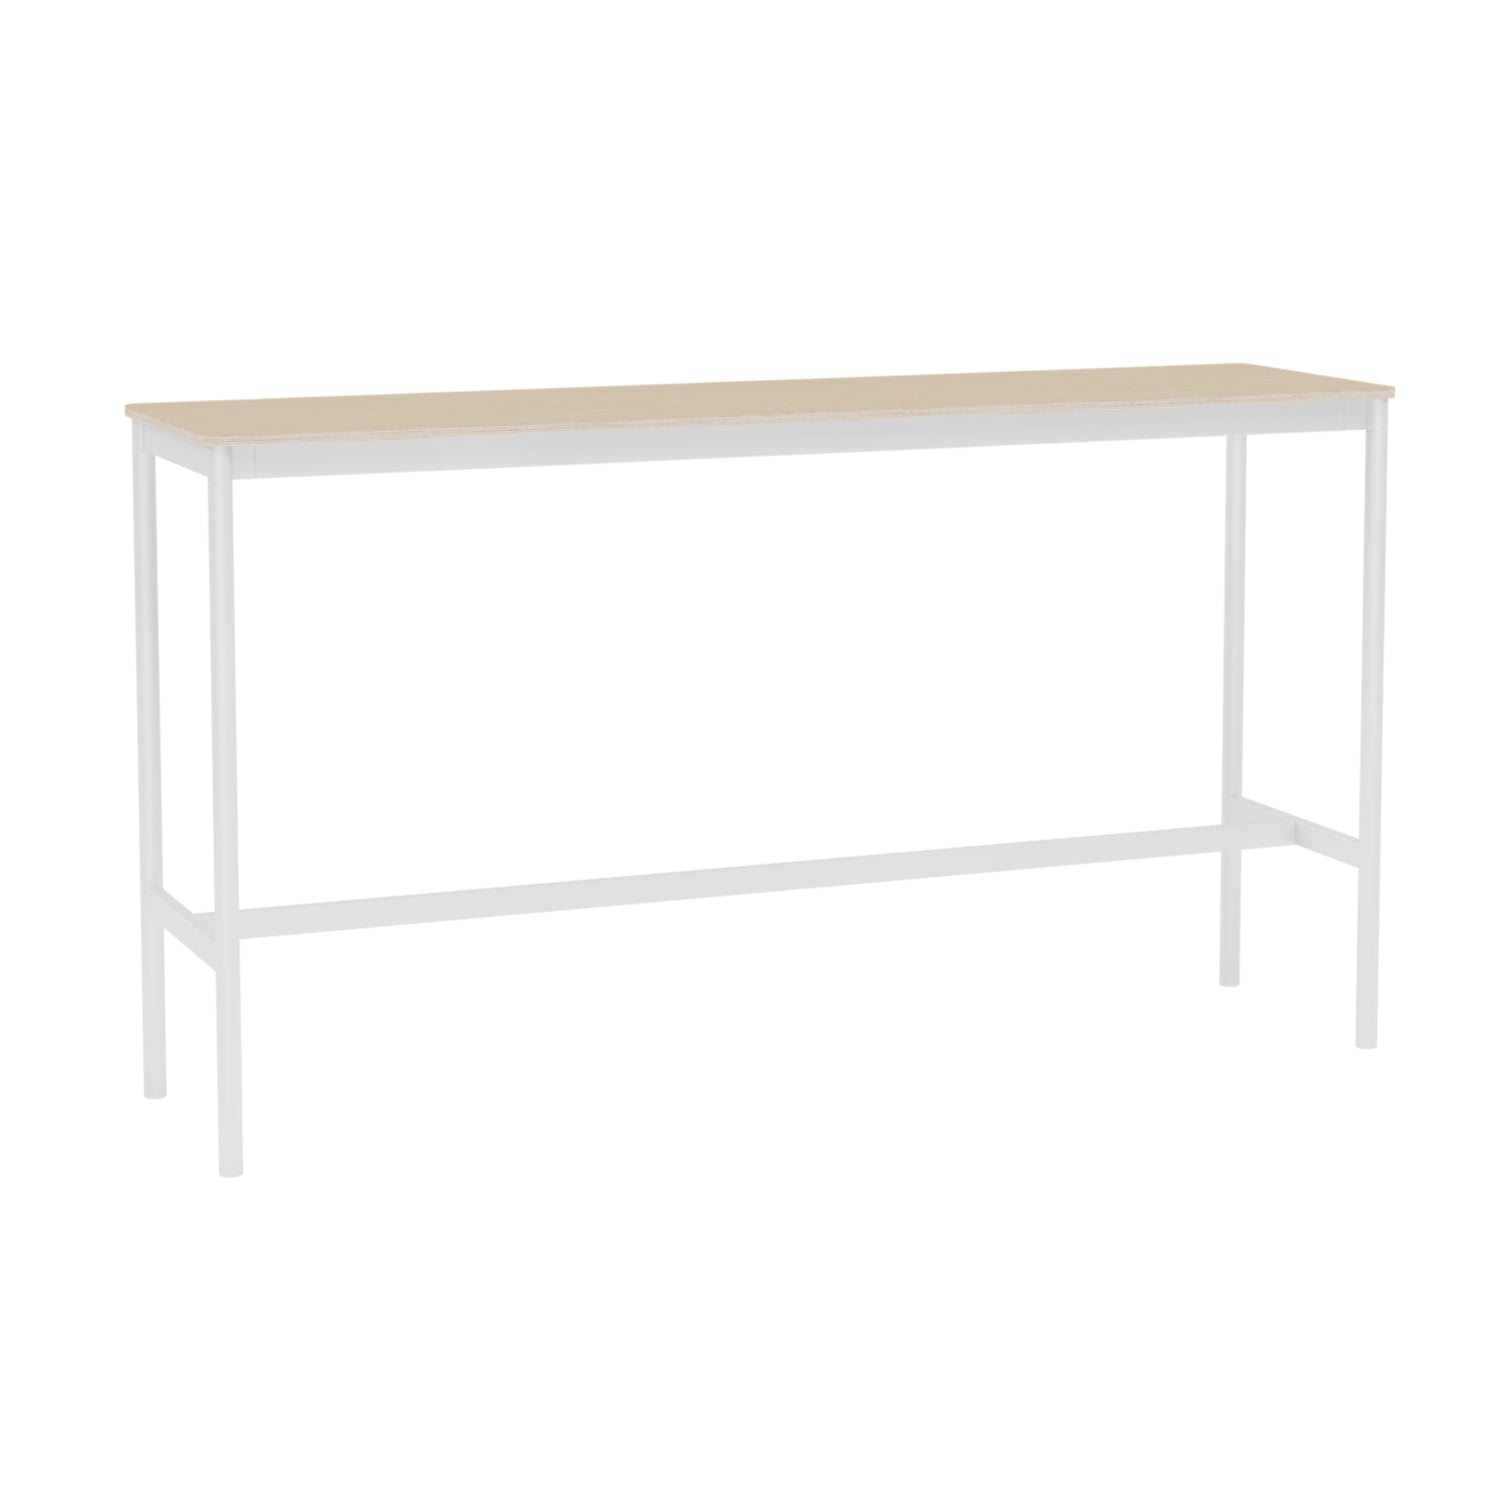 Base High Table: Oak Veneer + Plywood Edge + White